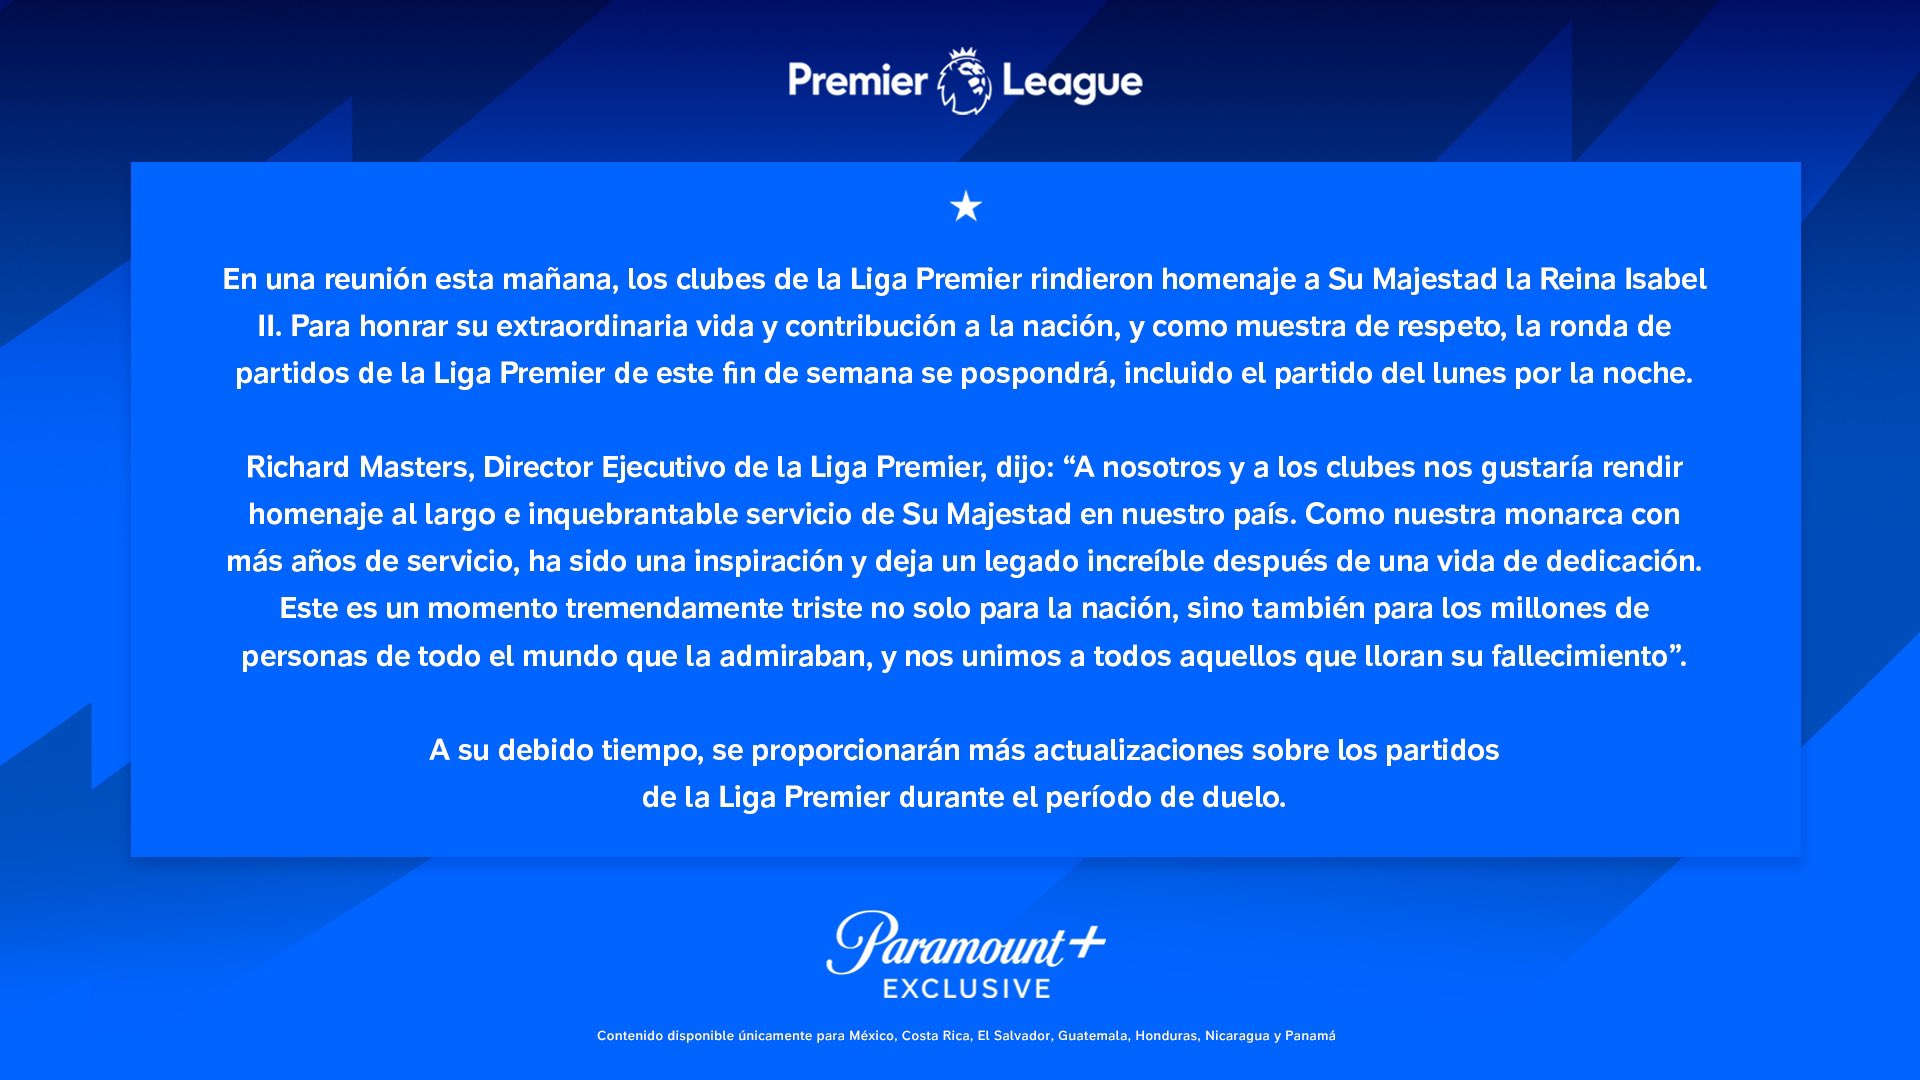 Paramount+ Latinoamérica on Twitter: "Comunicado oficial de Liga Premier. Aún no se ha comunicado cuándo reanudarán los partidos de la temporada. https://t.co/QA2emcEETo" /